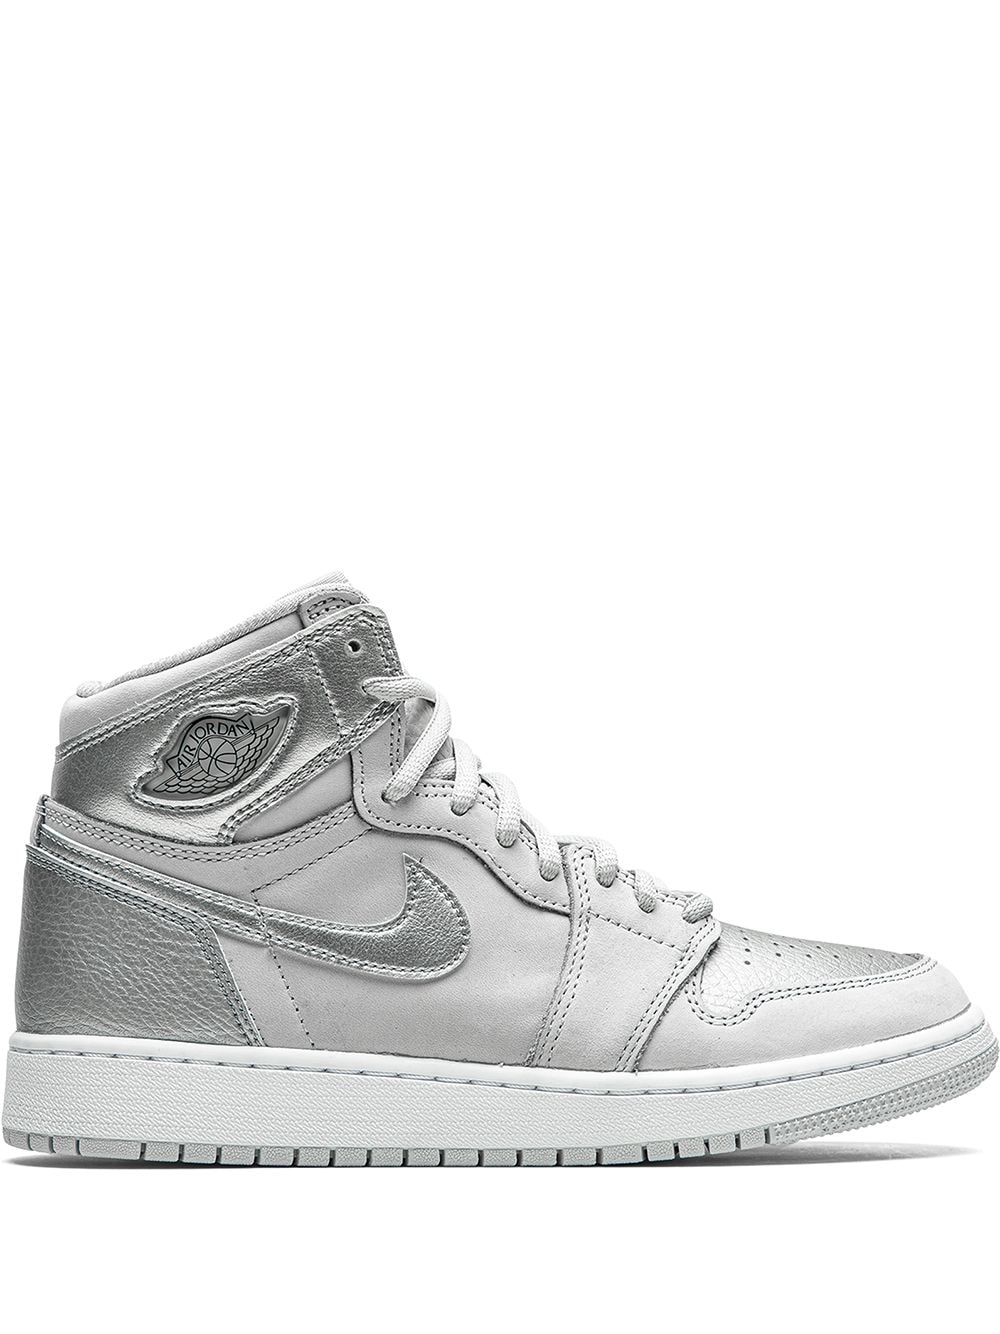 Jordan Kids Air Jordan 1 High OG "Co.Jp - Metallic Silver" sneakers - Grey von Jordan Kids